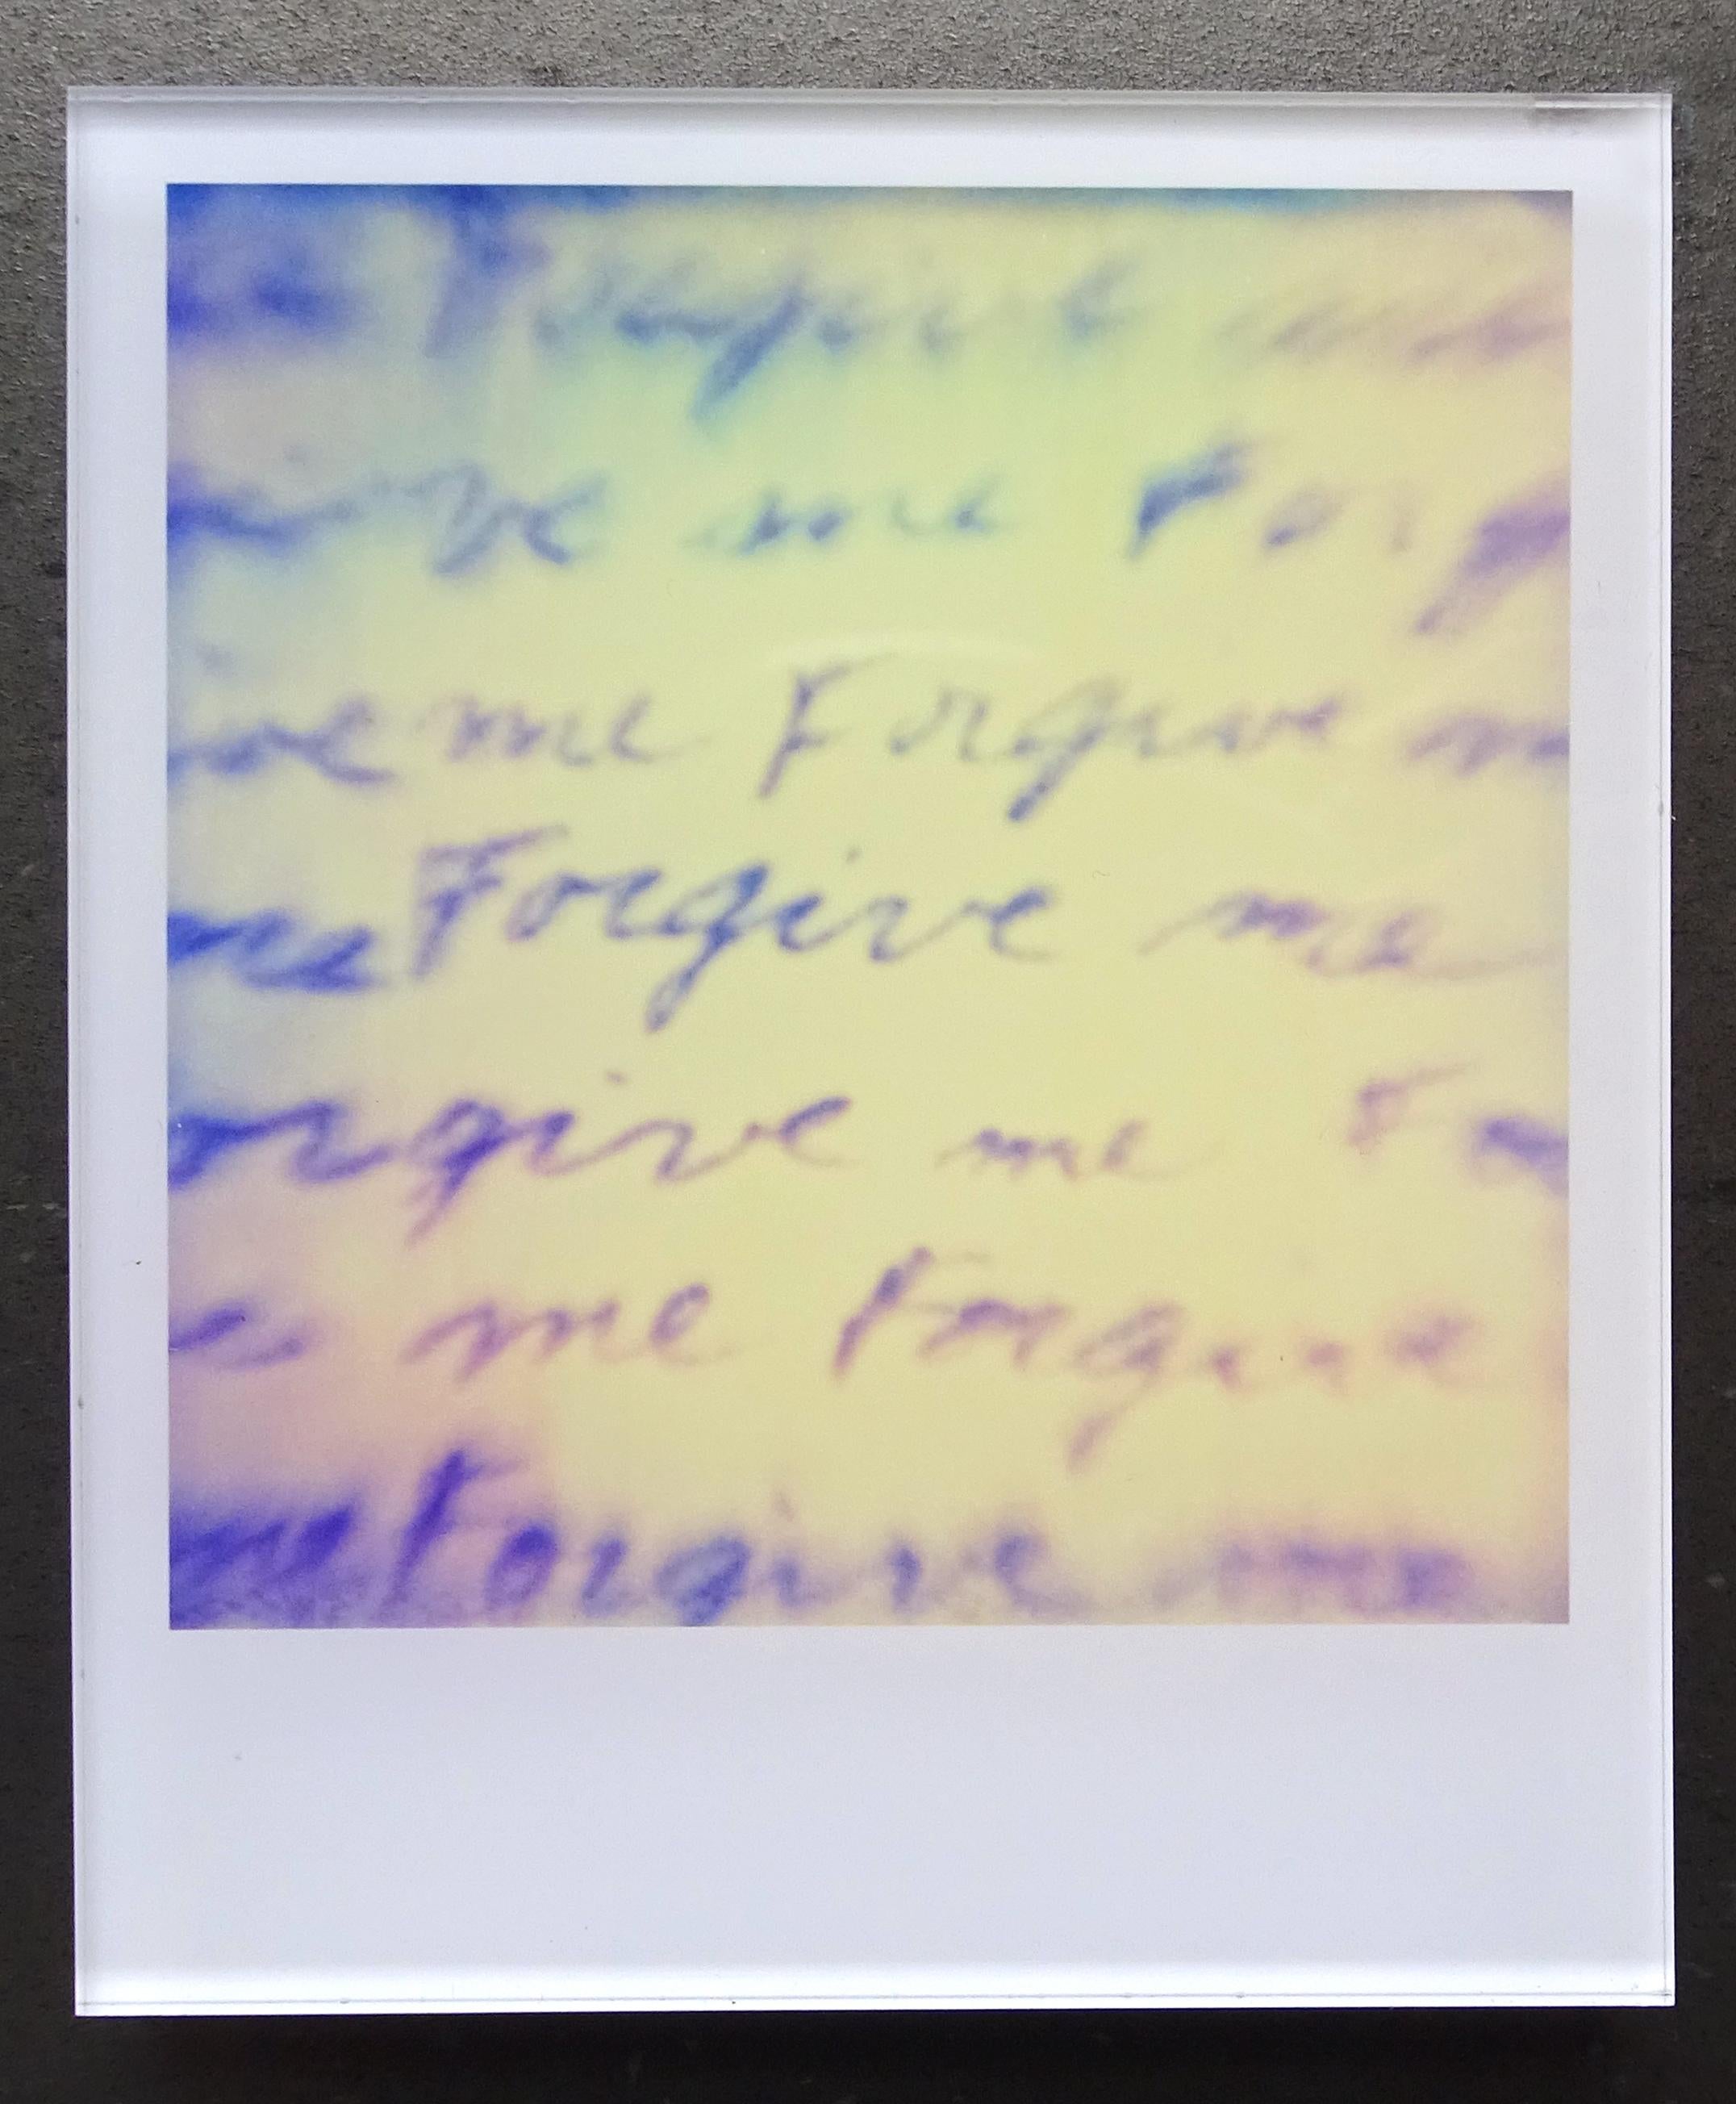 Stefanie Schneider Minis - Forgive Me (Stay) - based on the Polaroid